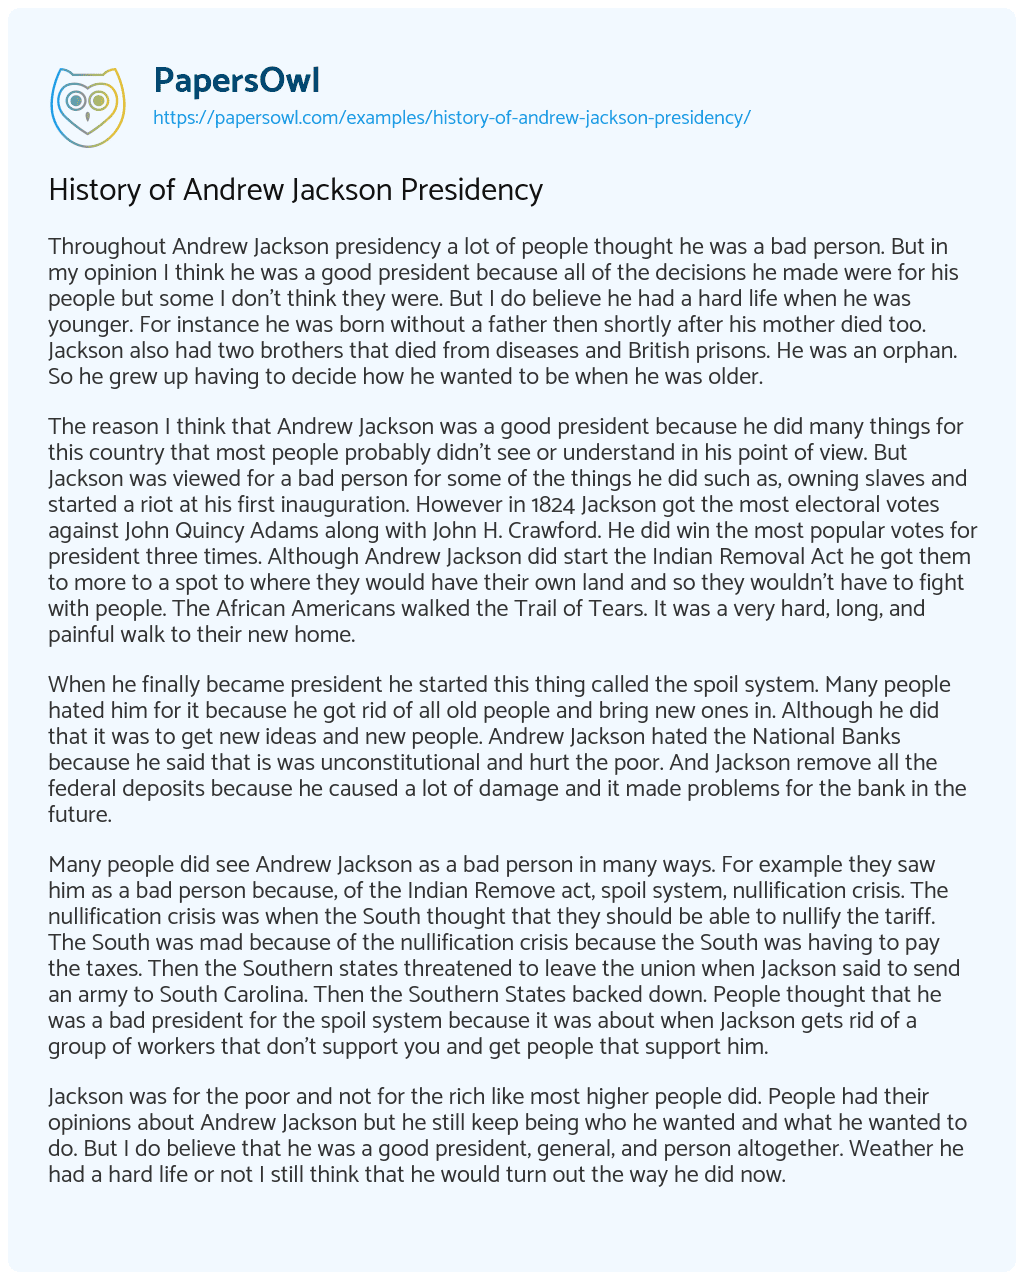 Essay on History of Andrew Jackson Presidency